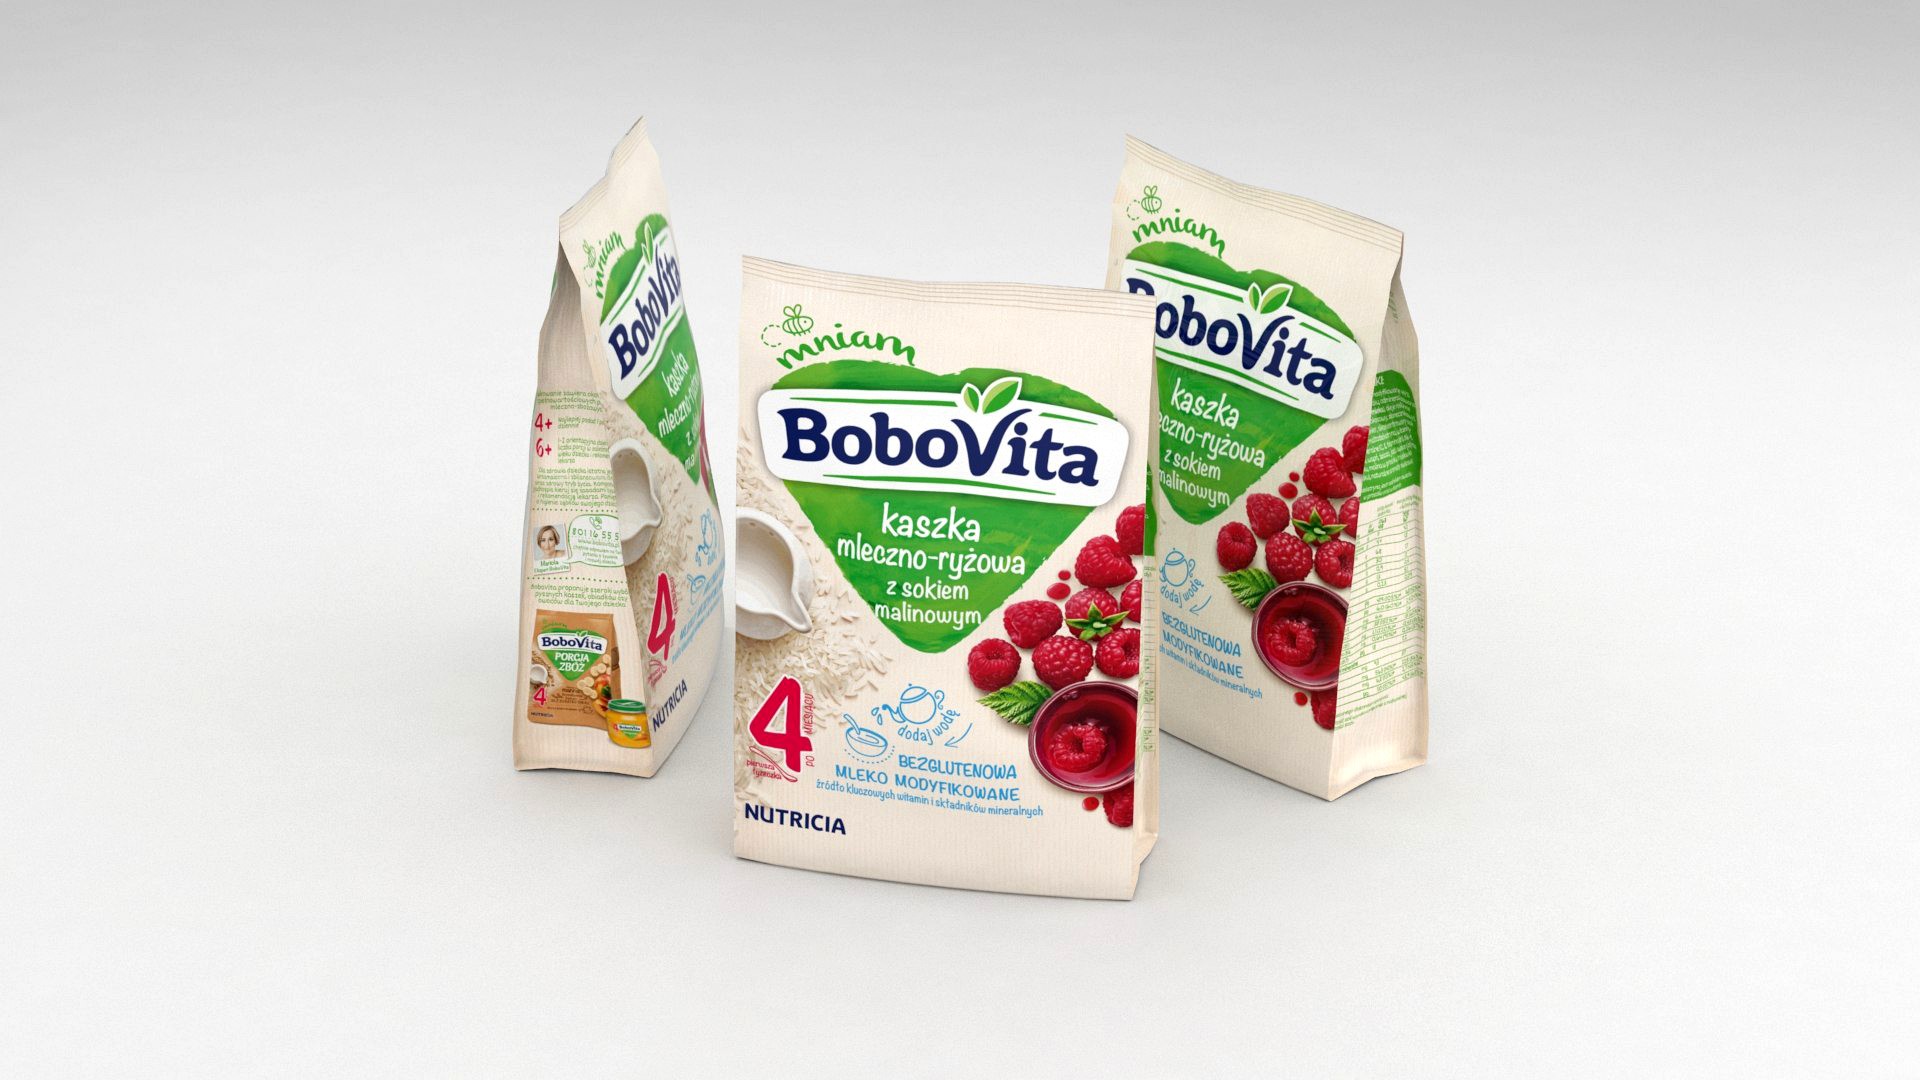 Nutricia Bobovita Instant Milk Semolina with Raspberries for Babies 230g